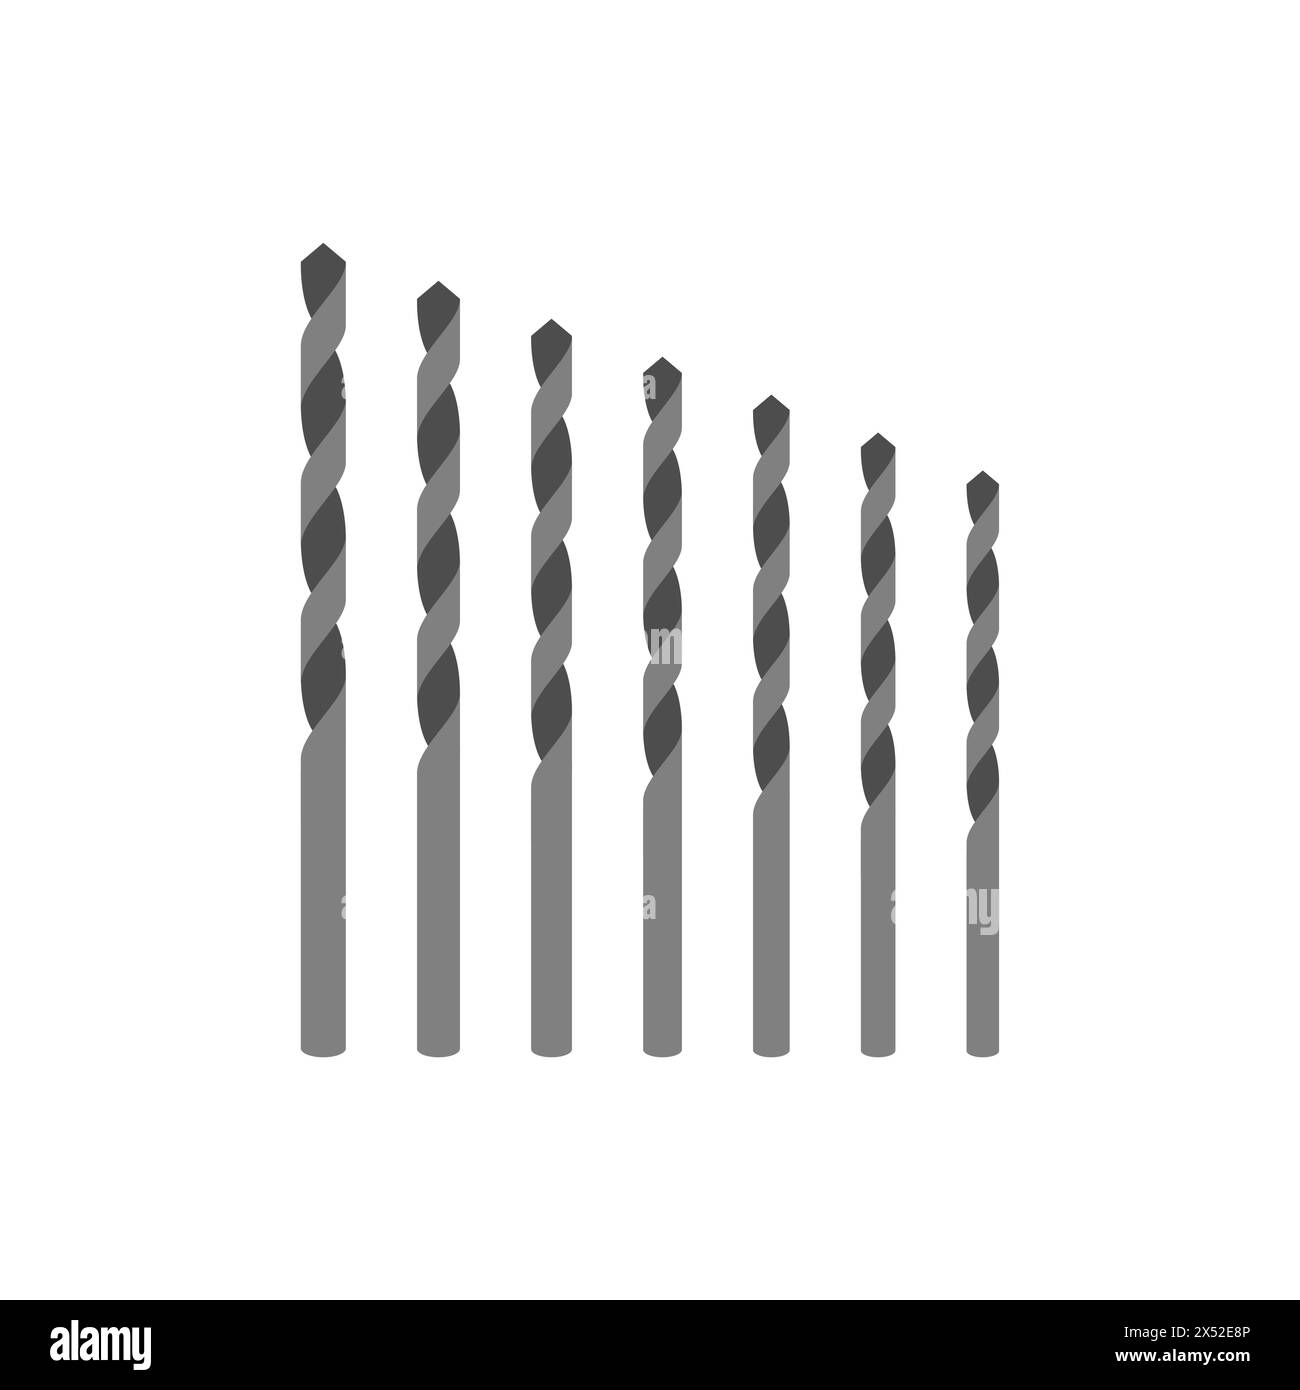 Set of drills for metal. Vector illustration Stock Vector